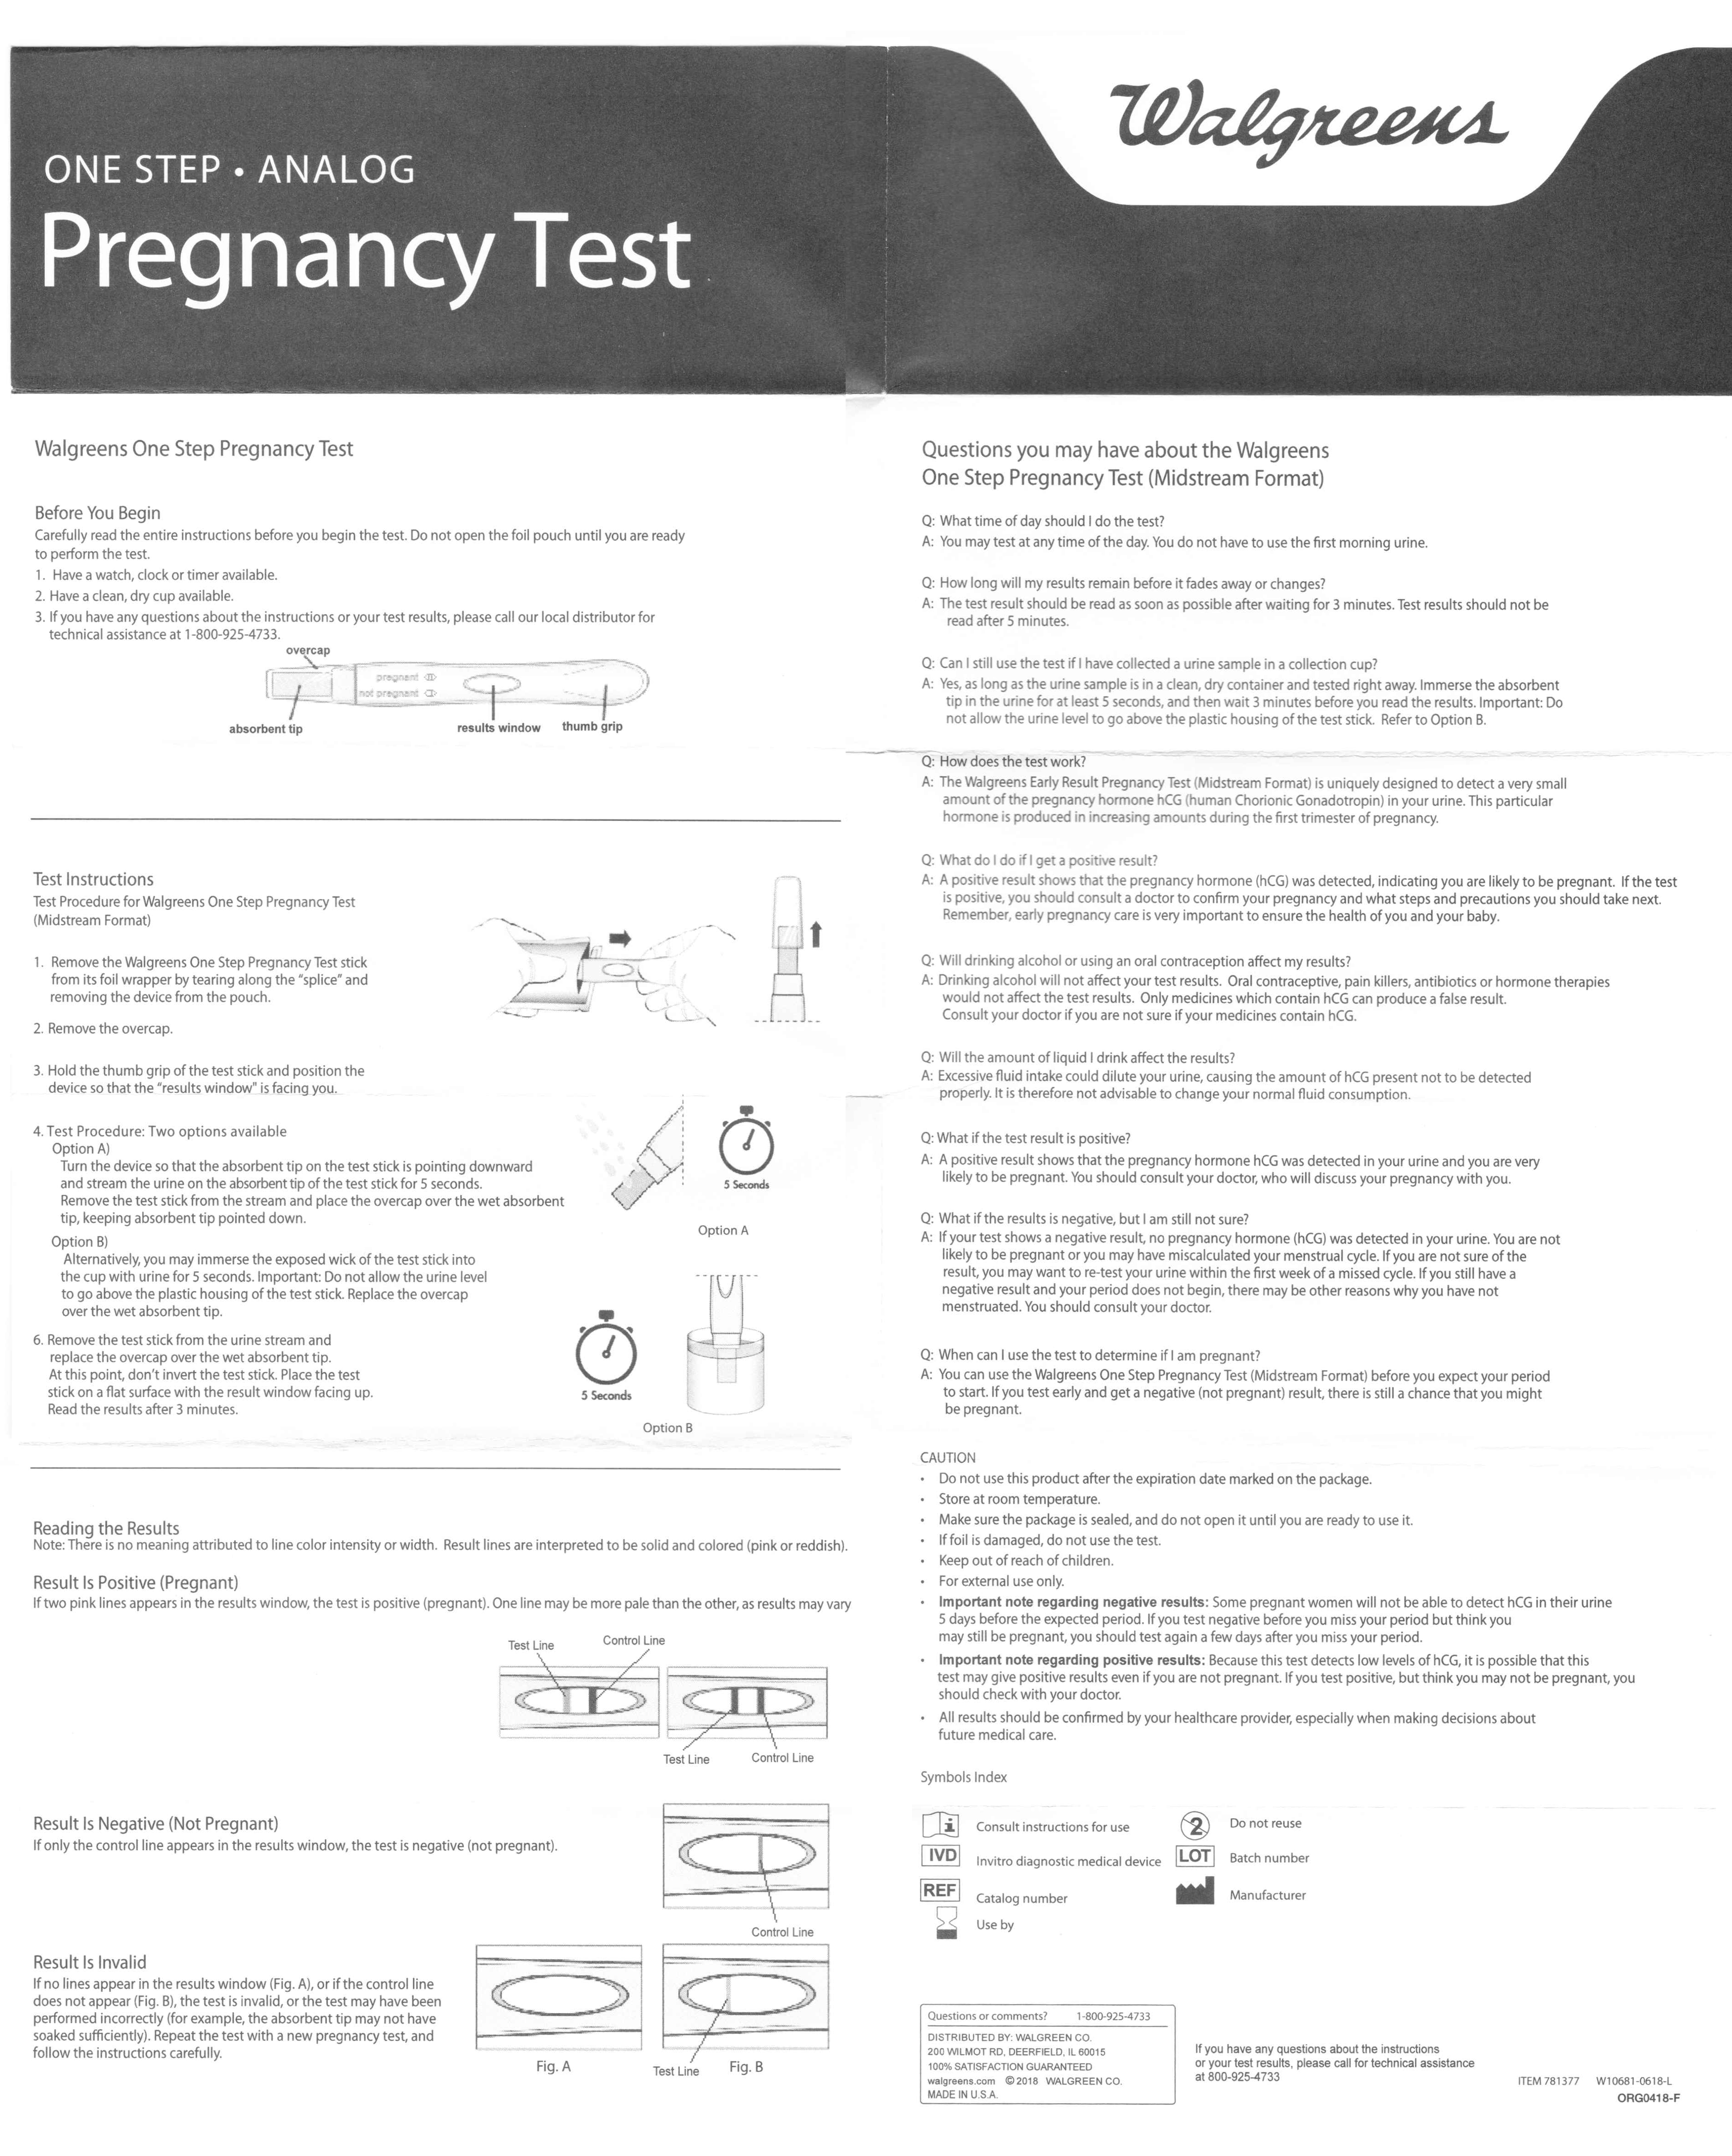 Walgreens One Step Analog Pregnancy Test instructions.